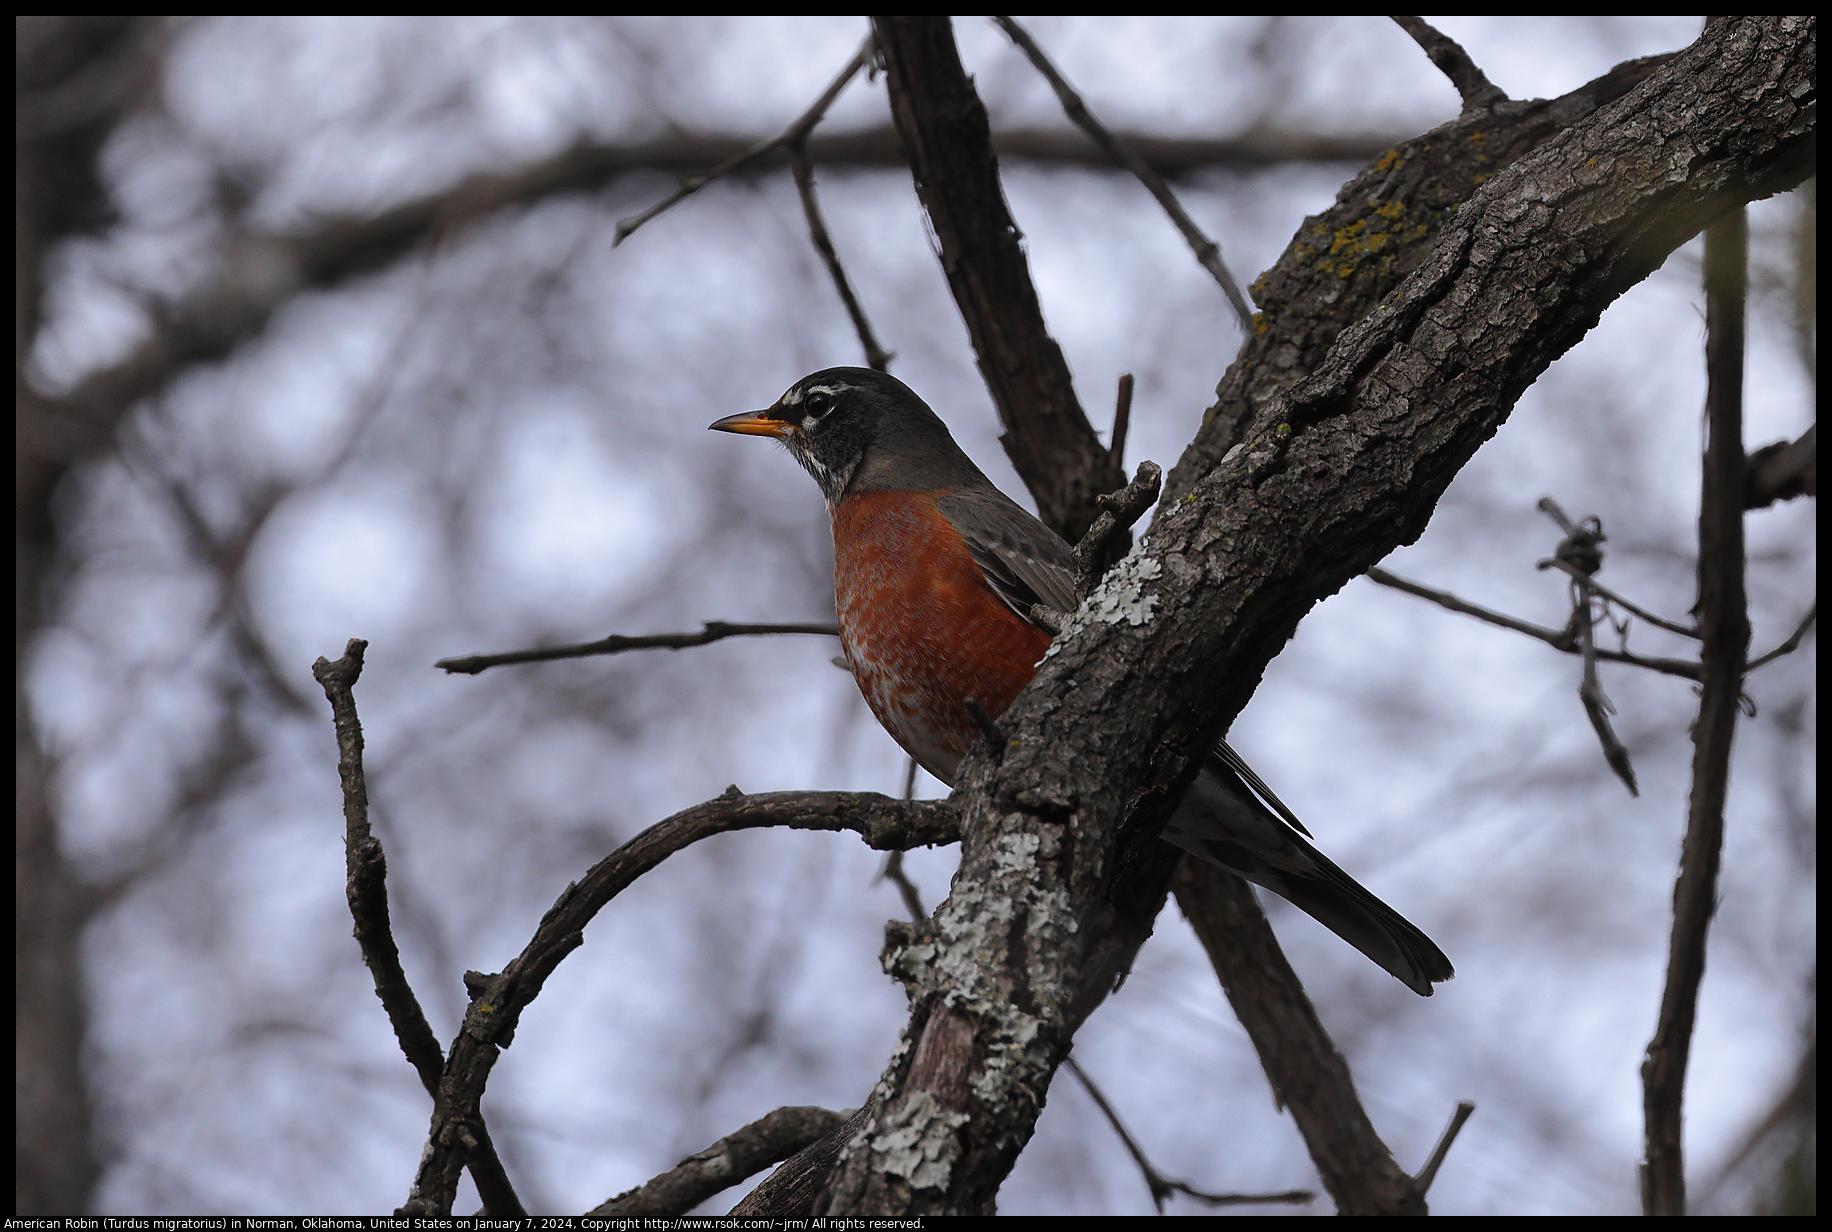 American Robin (Turdus migratorius) in Norman, Oklahoma, United States on January 7, 2024